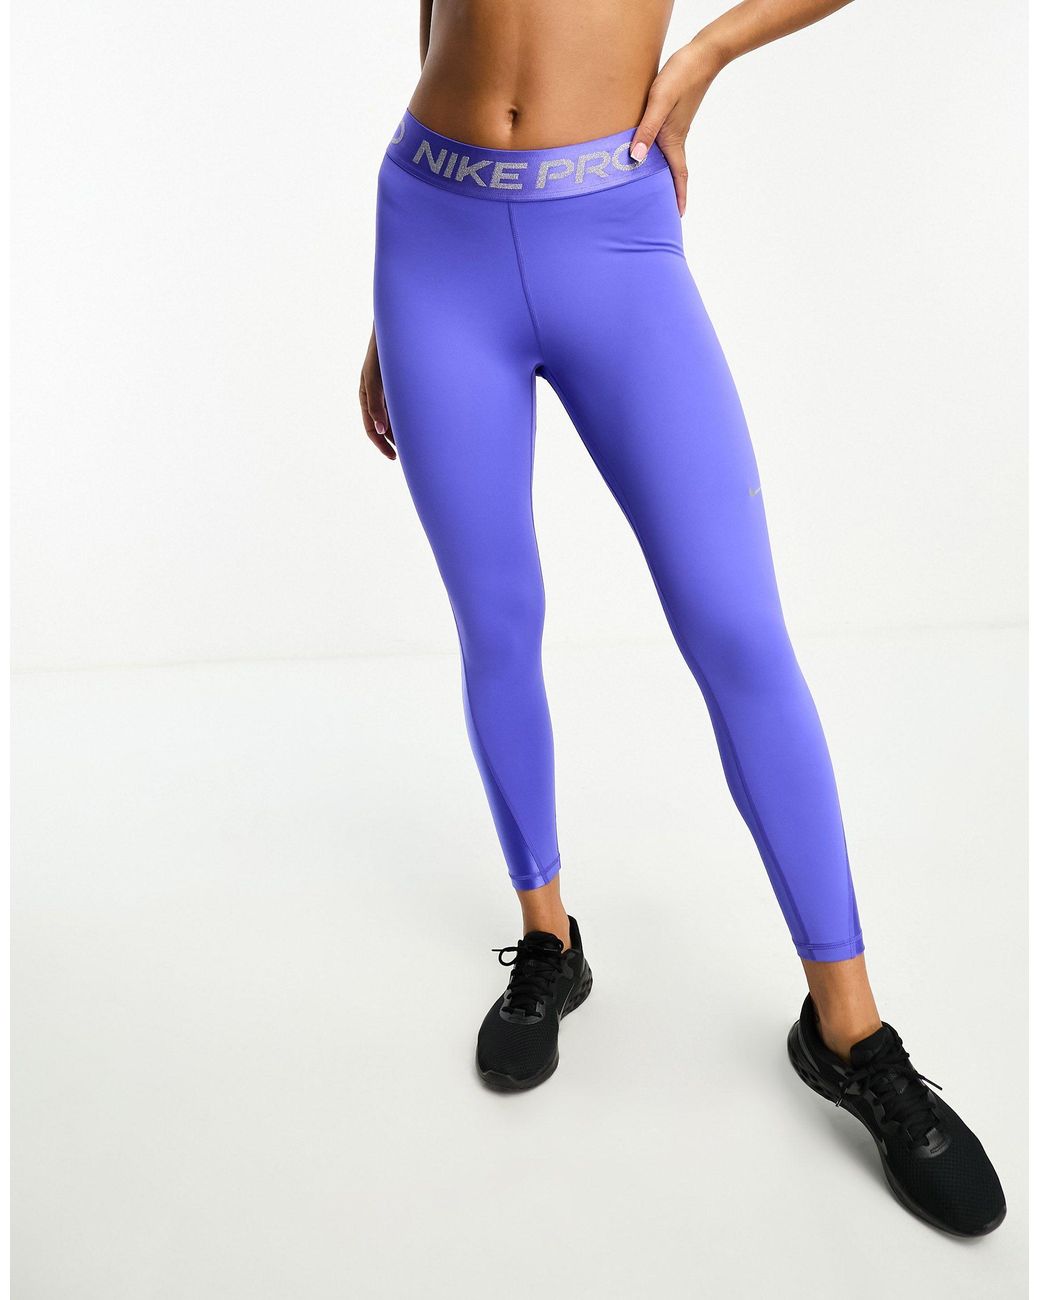 Nike Pro Training 365 leggings in purple, ASOS